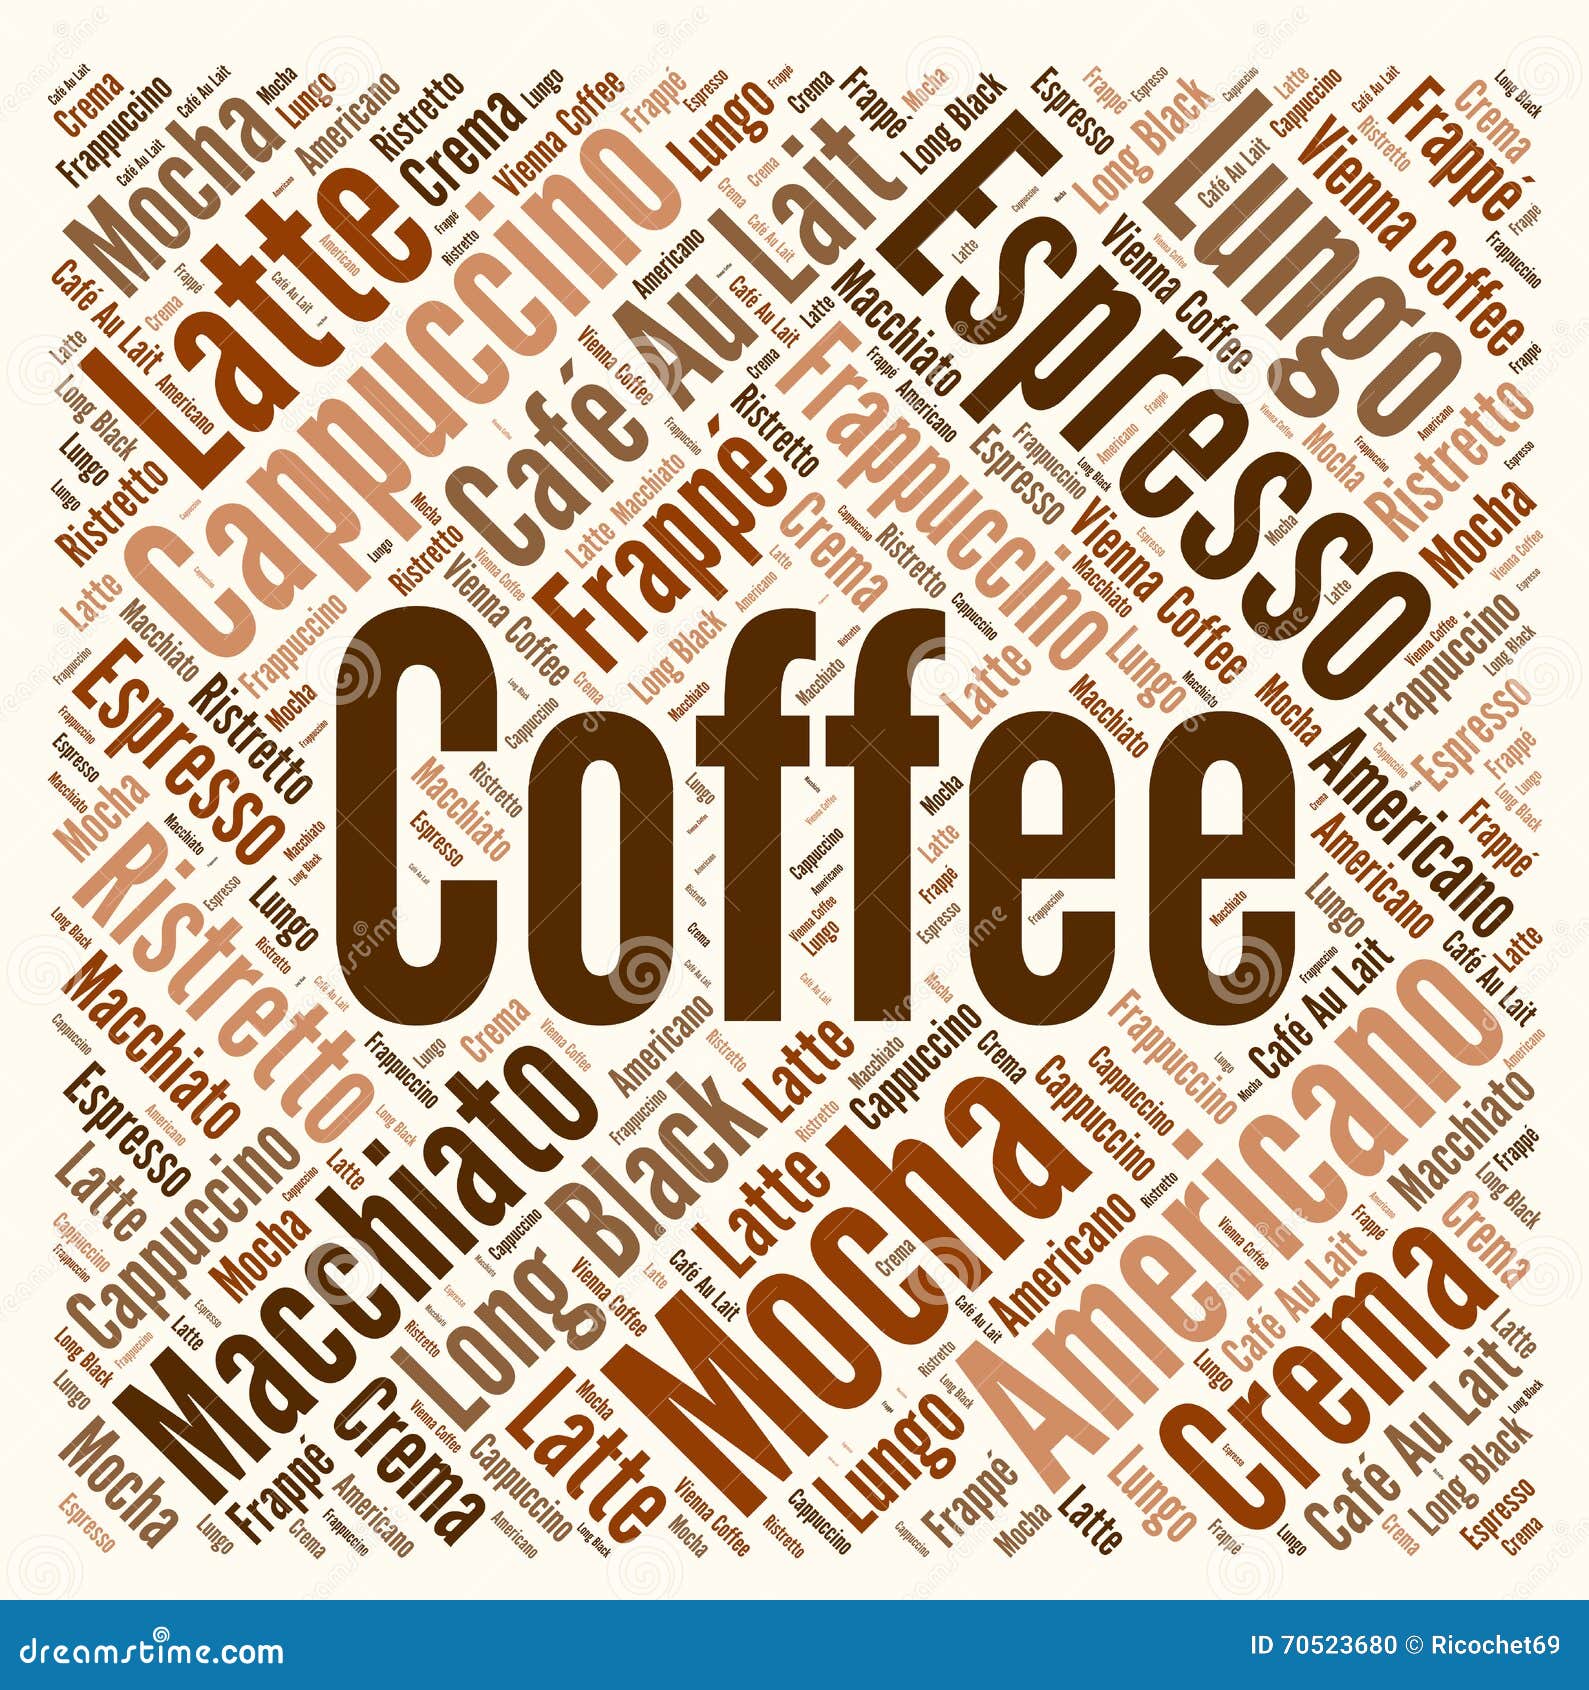 Coffee word cloud stock illustration. Illustration of illustration - 70523680